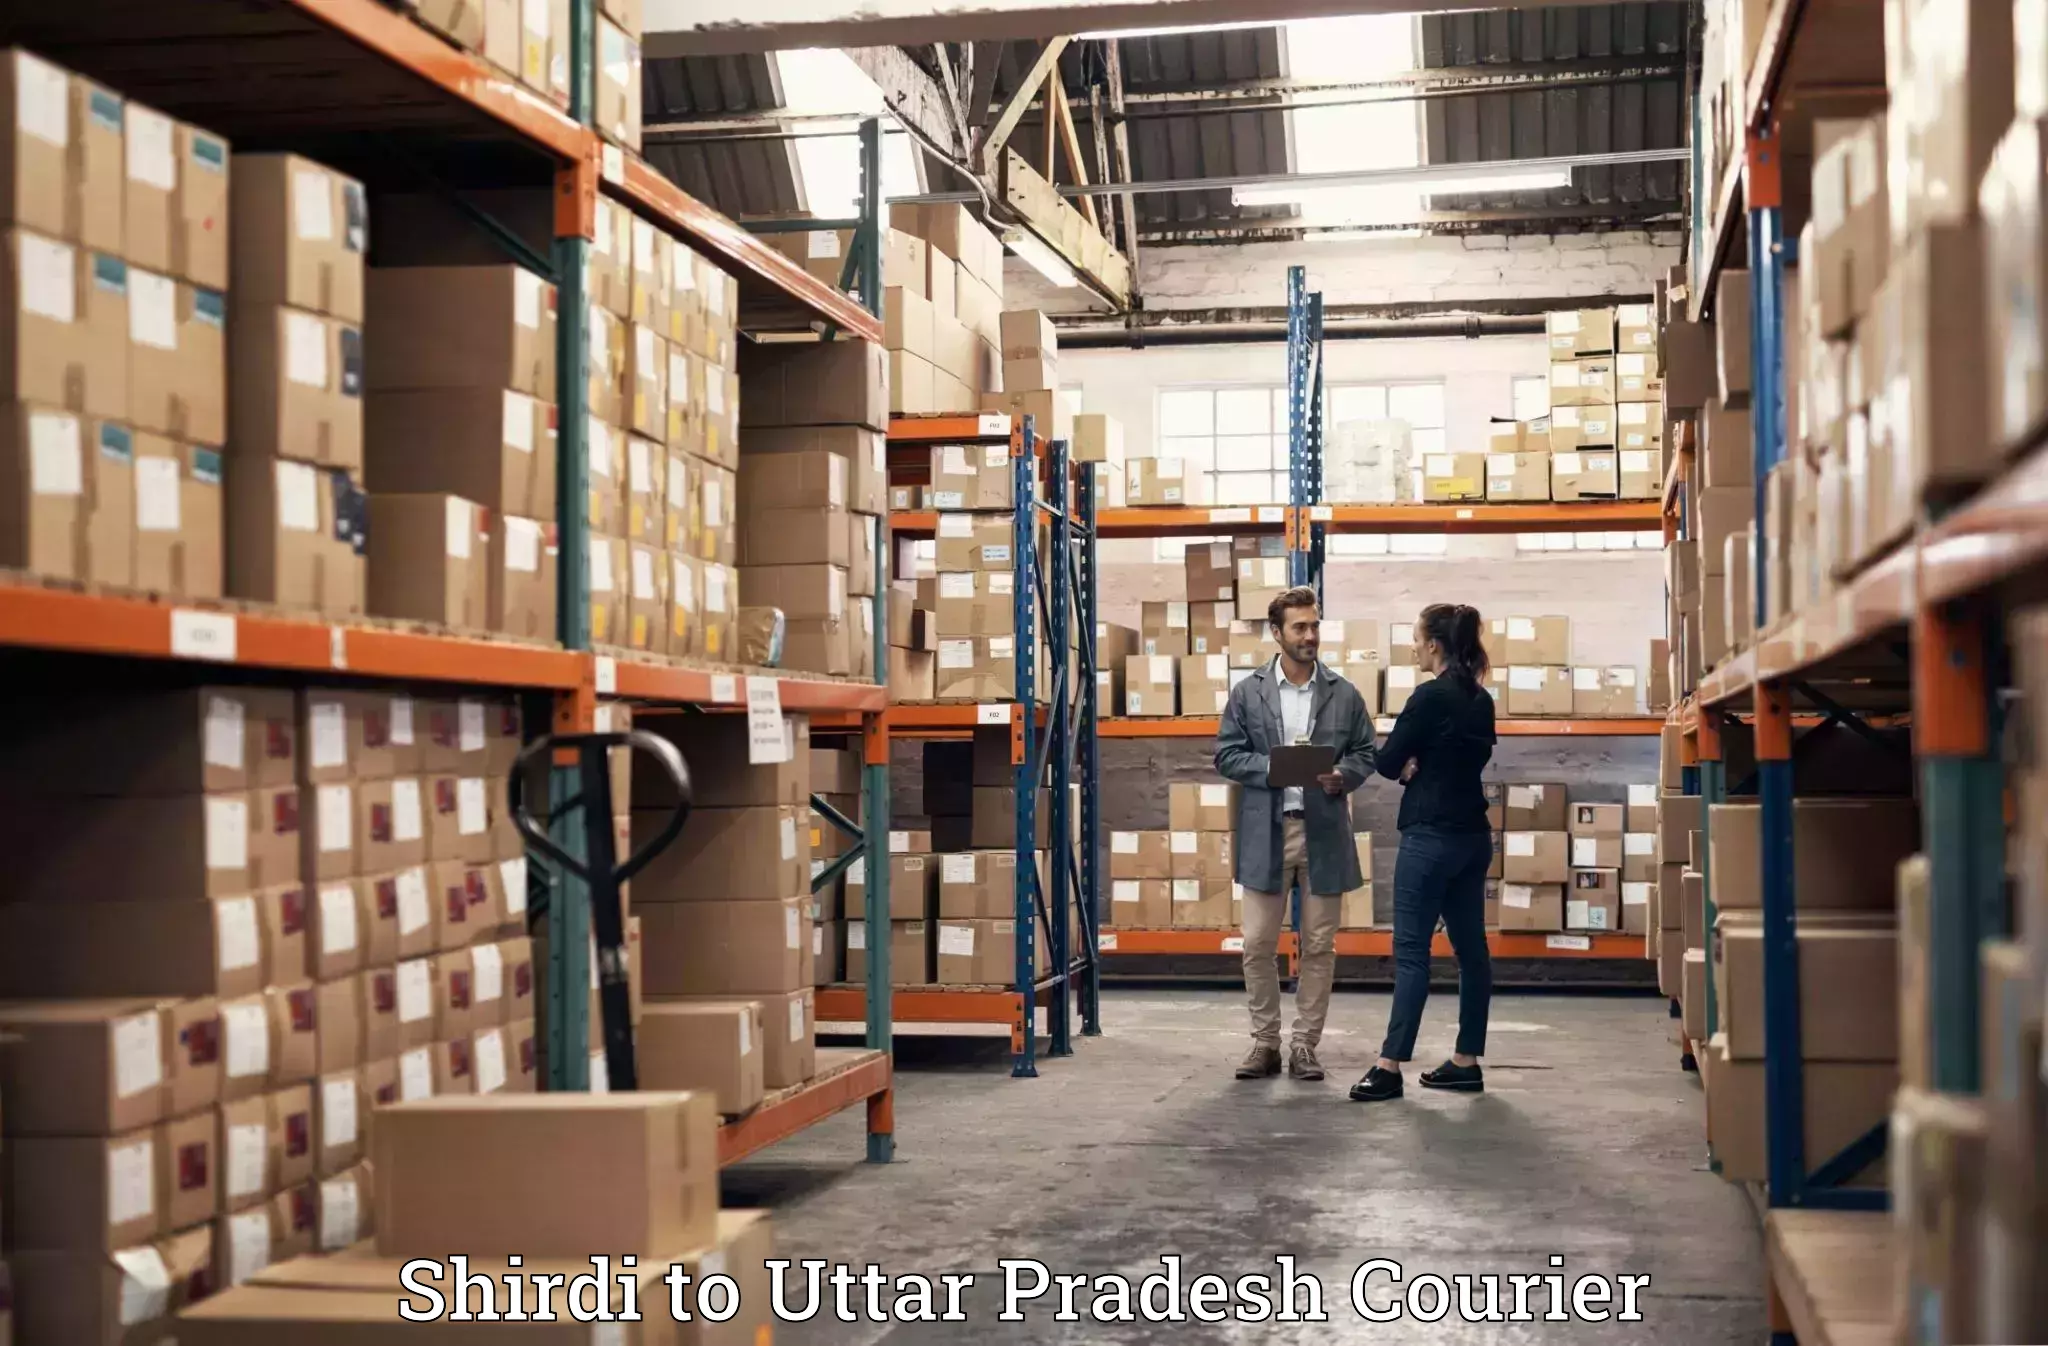 Luggage shipment specialists Shirdi to Uttar Pradesh